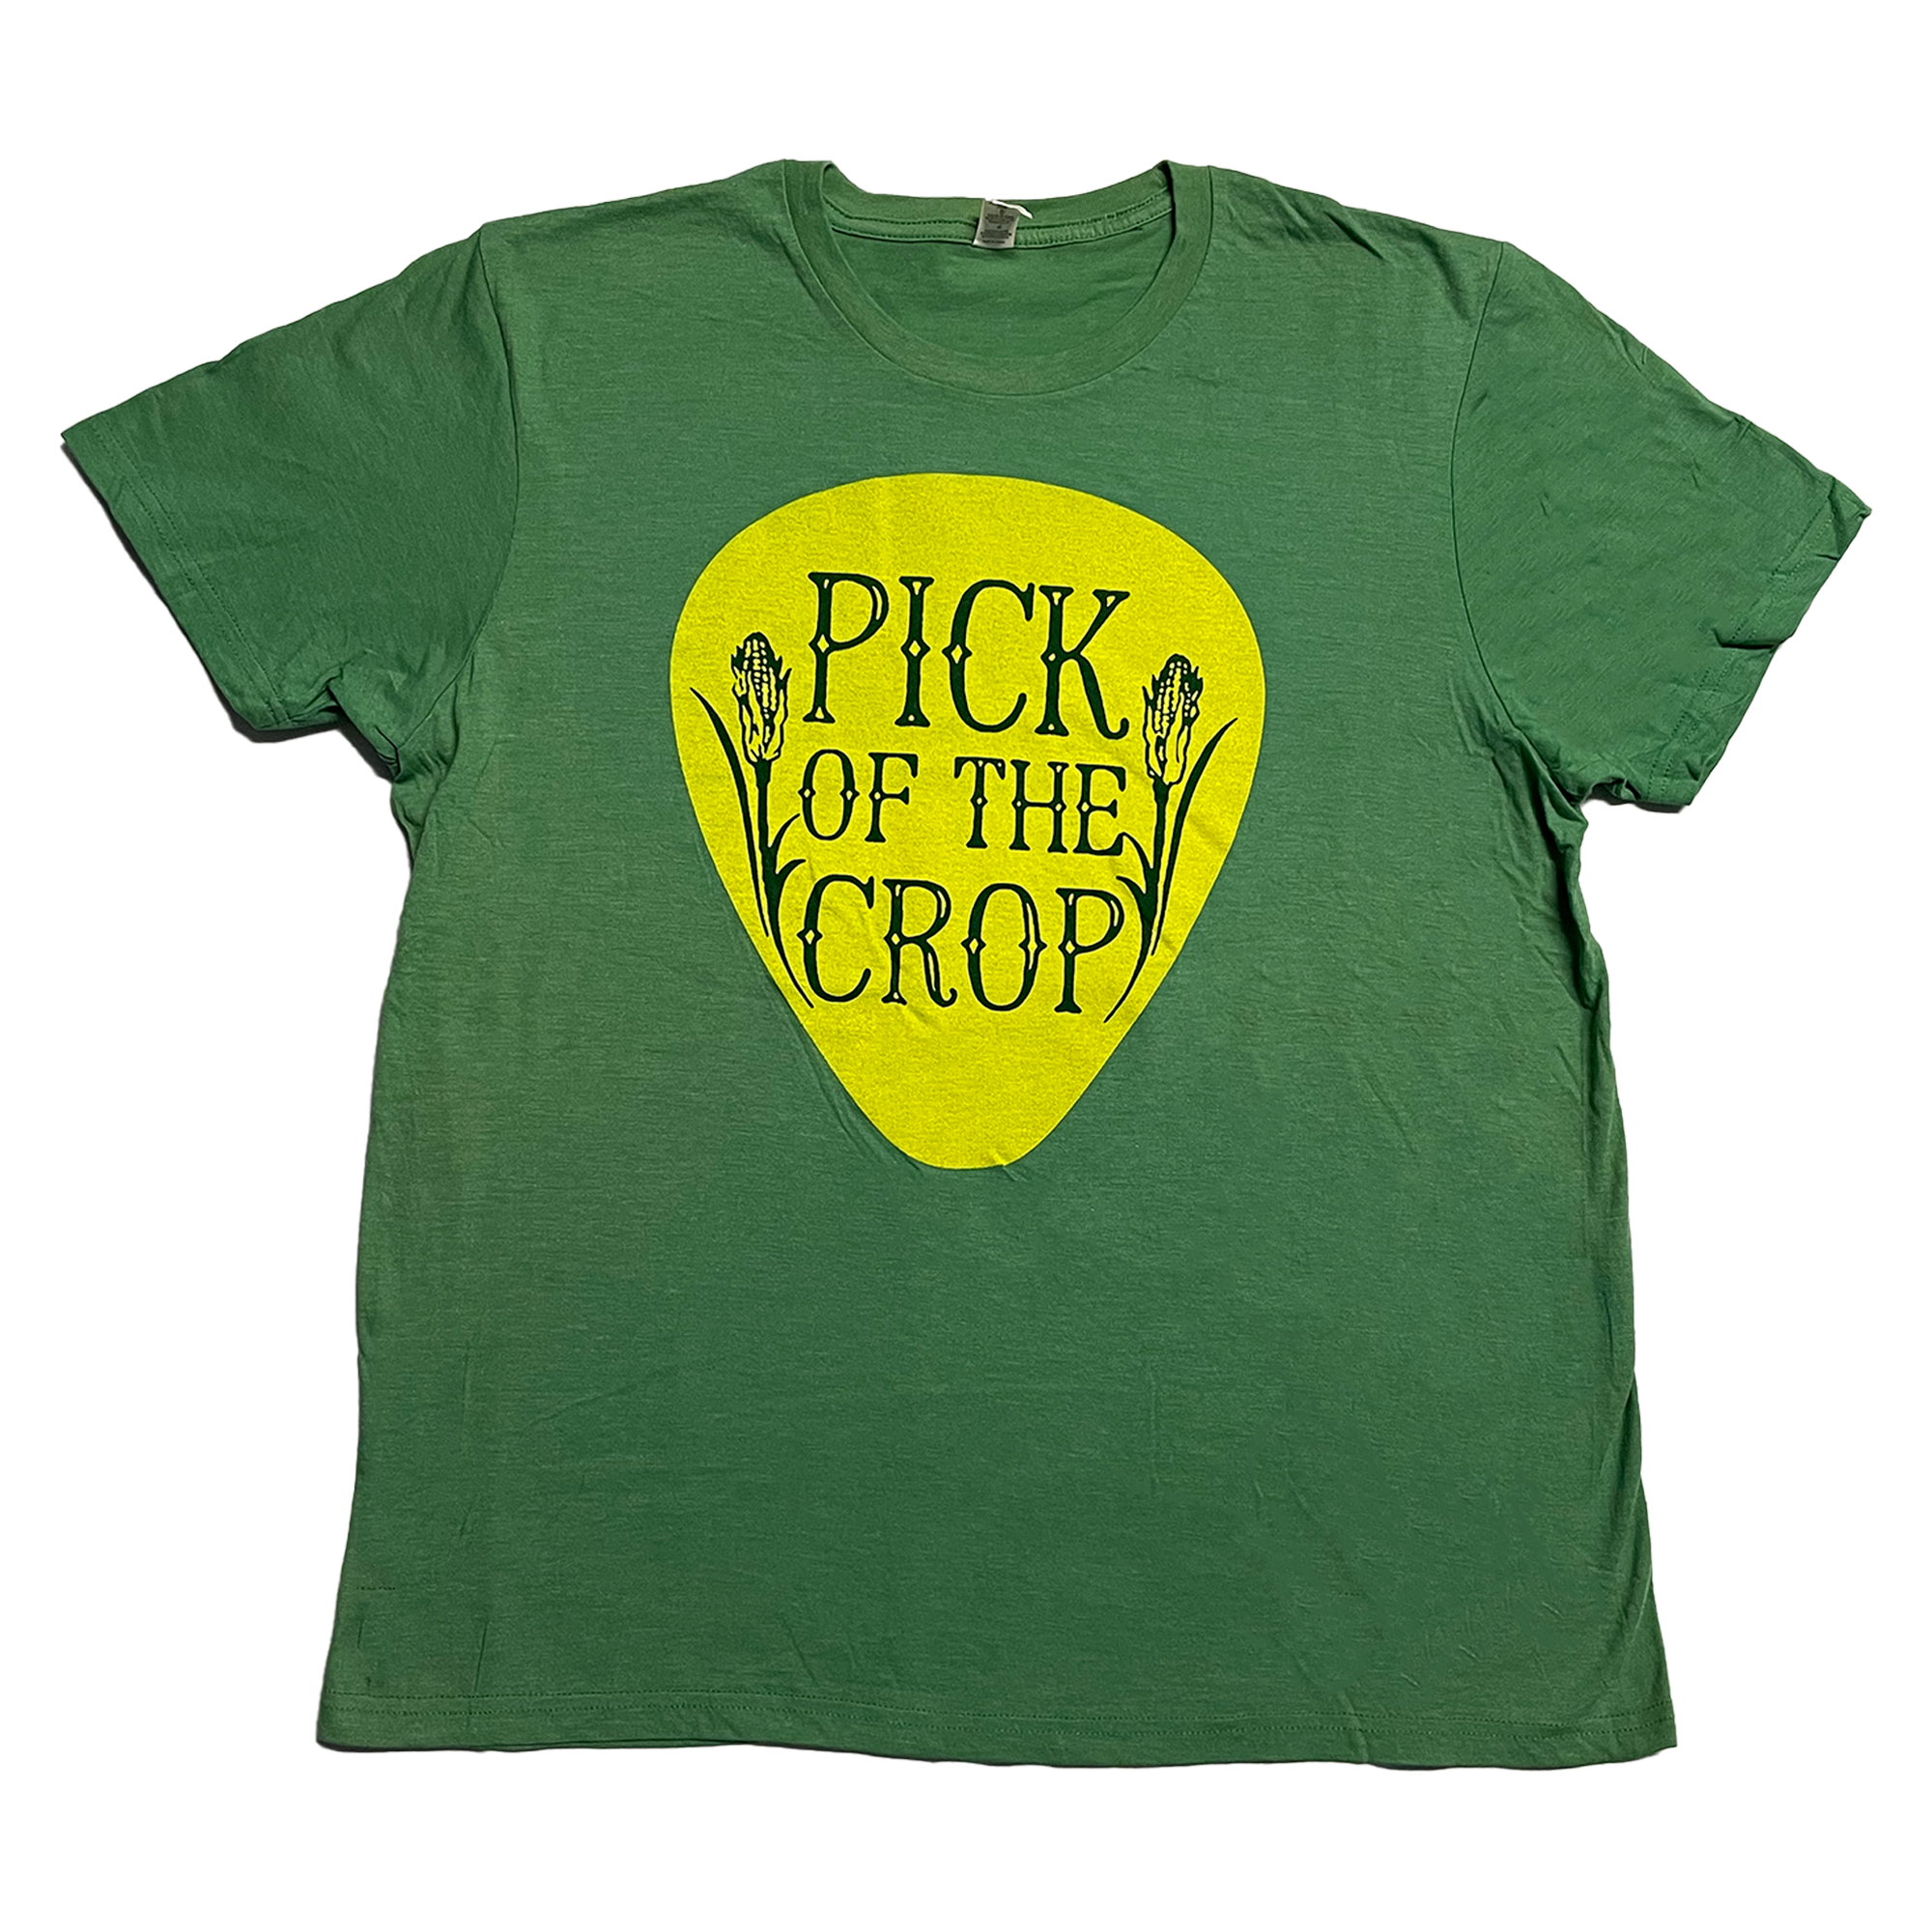 Steve Cropper - Pick of the Crop Shirt